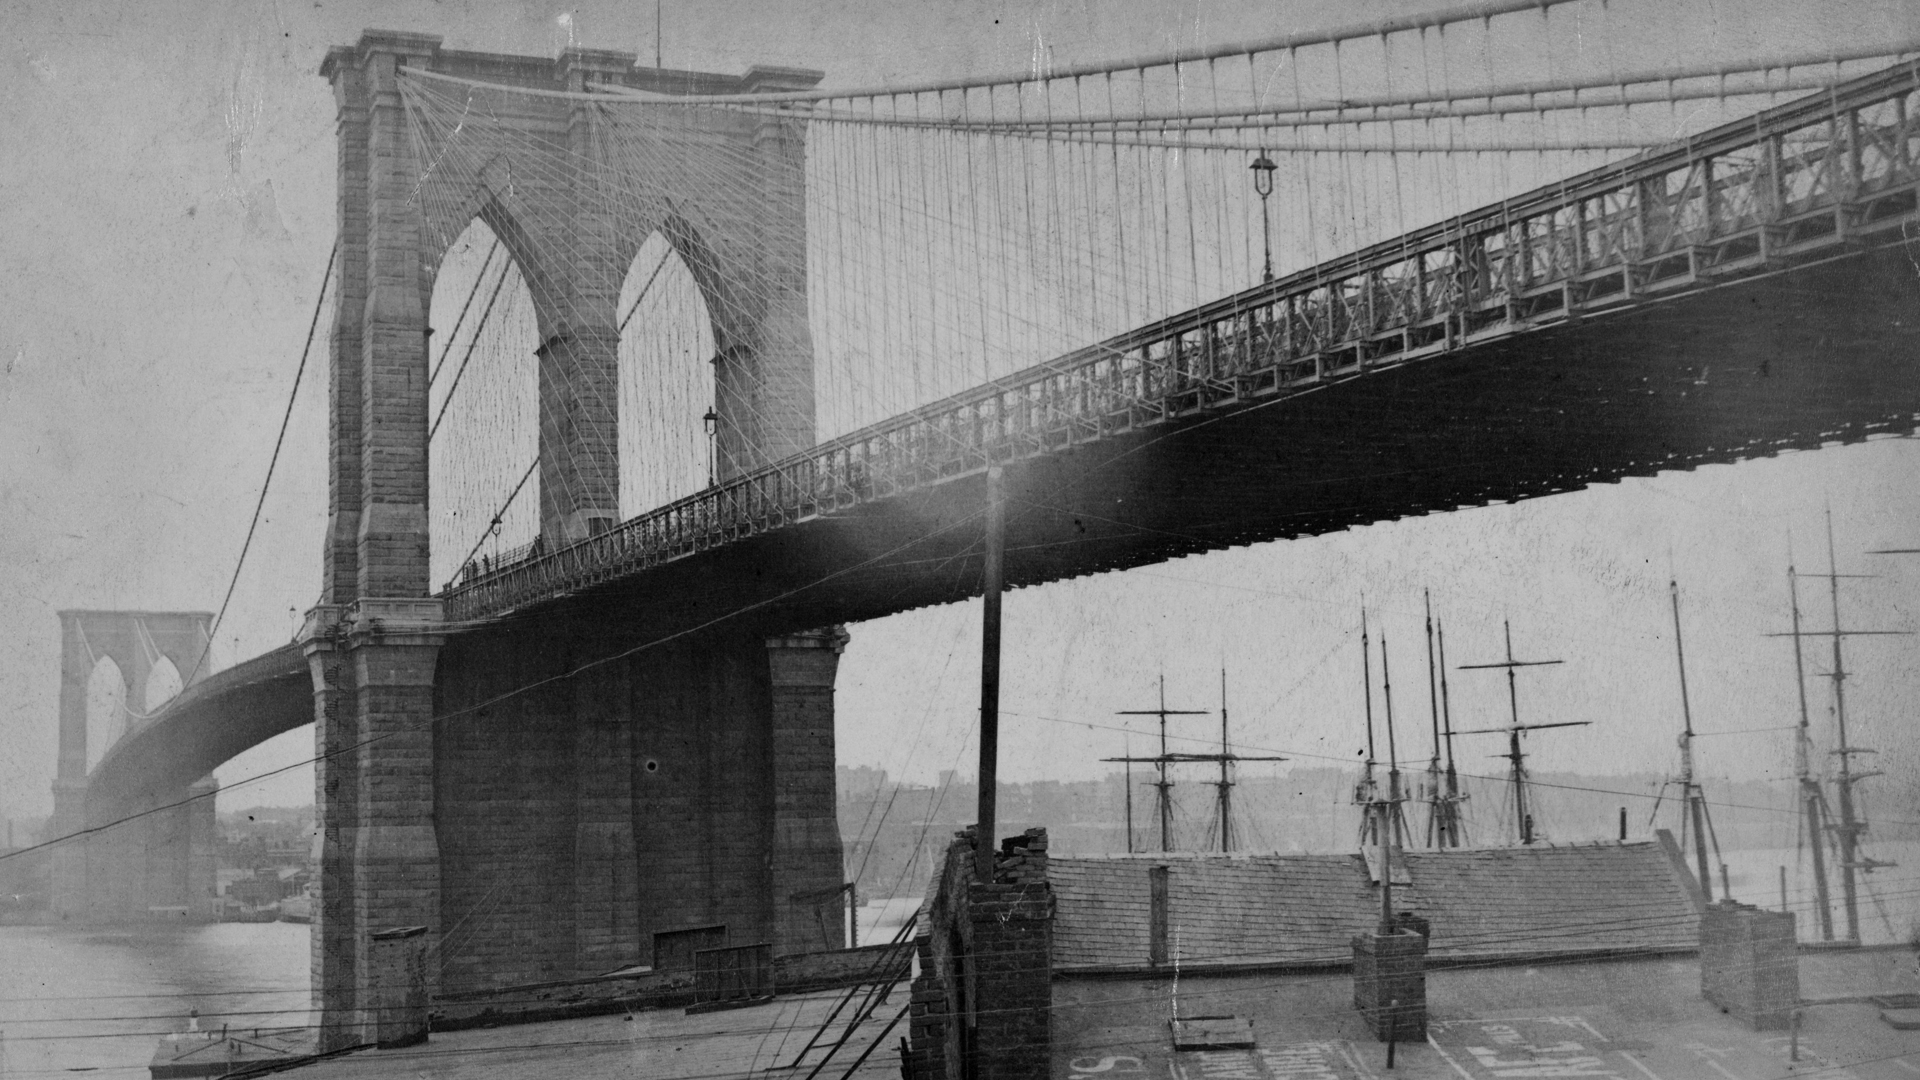 General 1920x1080 Brooklyn Bridge bridge architecture New York City monochrome film grain